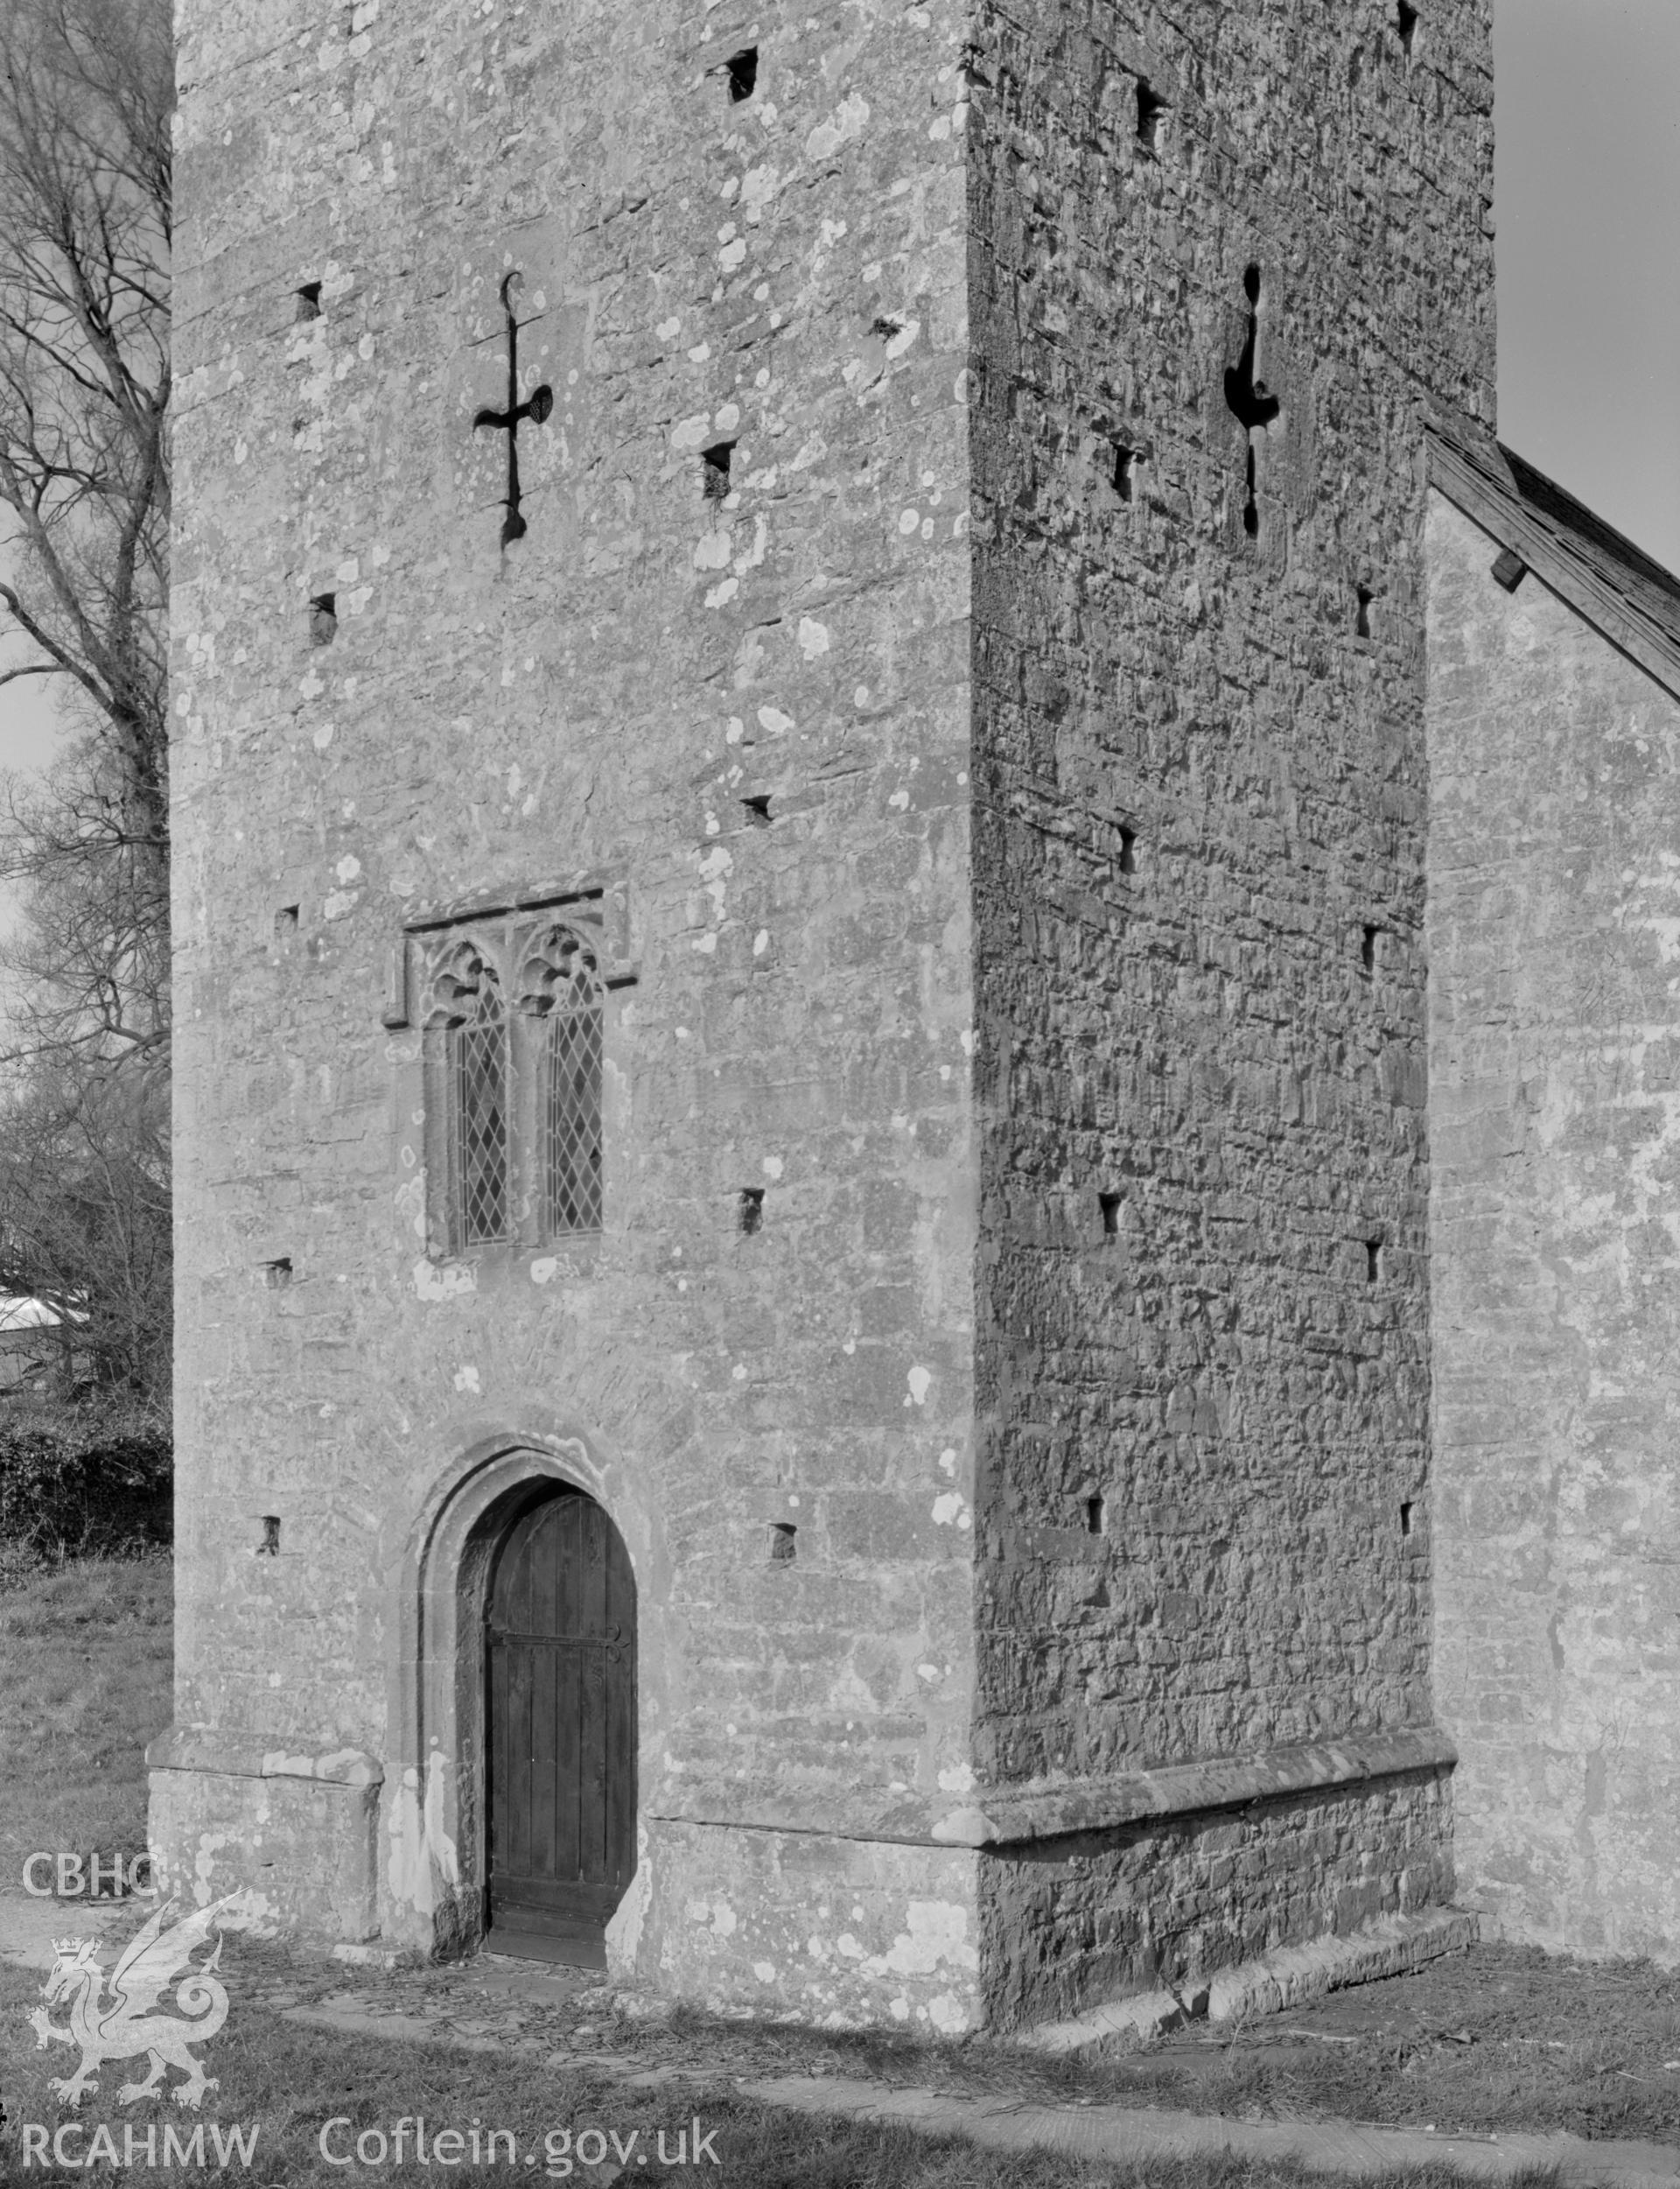 View of the tower at St Michael's Church, Llanmihangel taken 07.04.65.